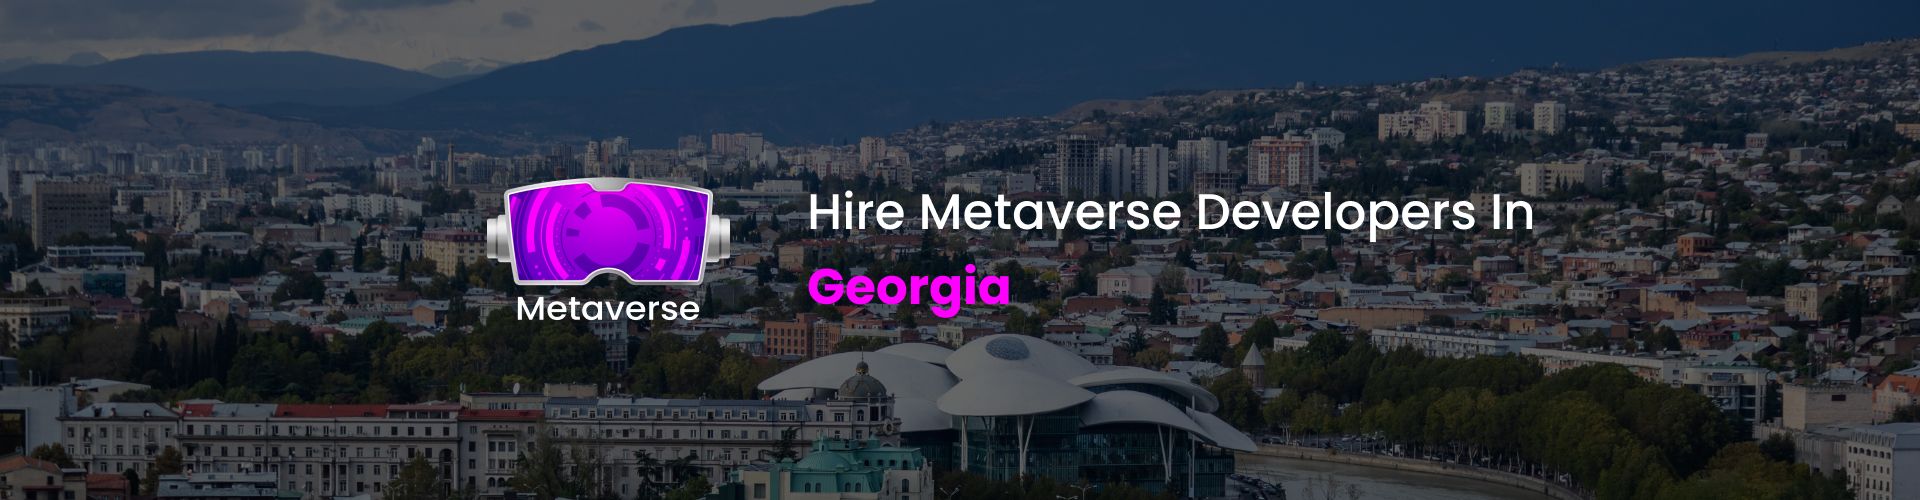 hire metaverse developers in georgia